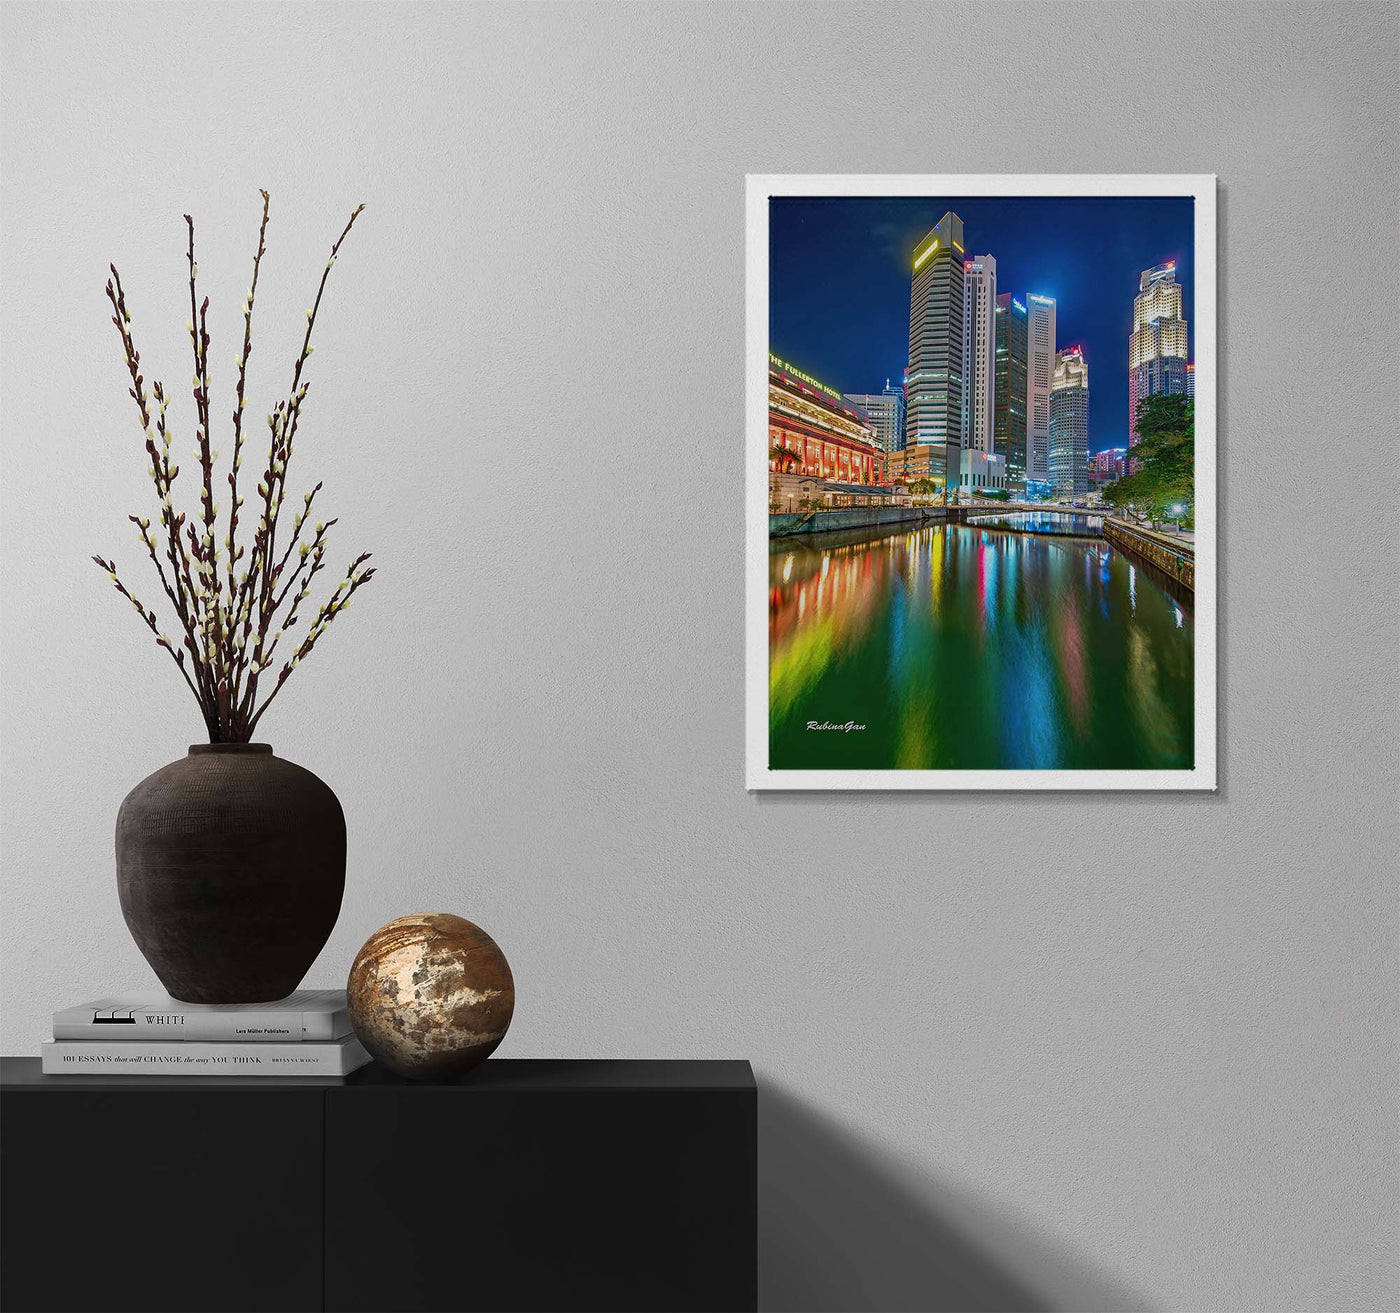 Singapore River (Art Prints)